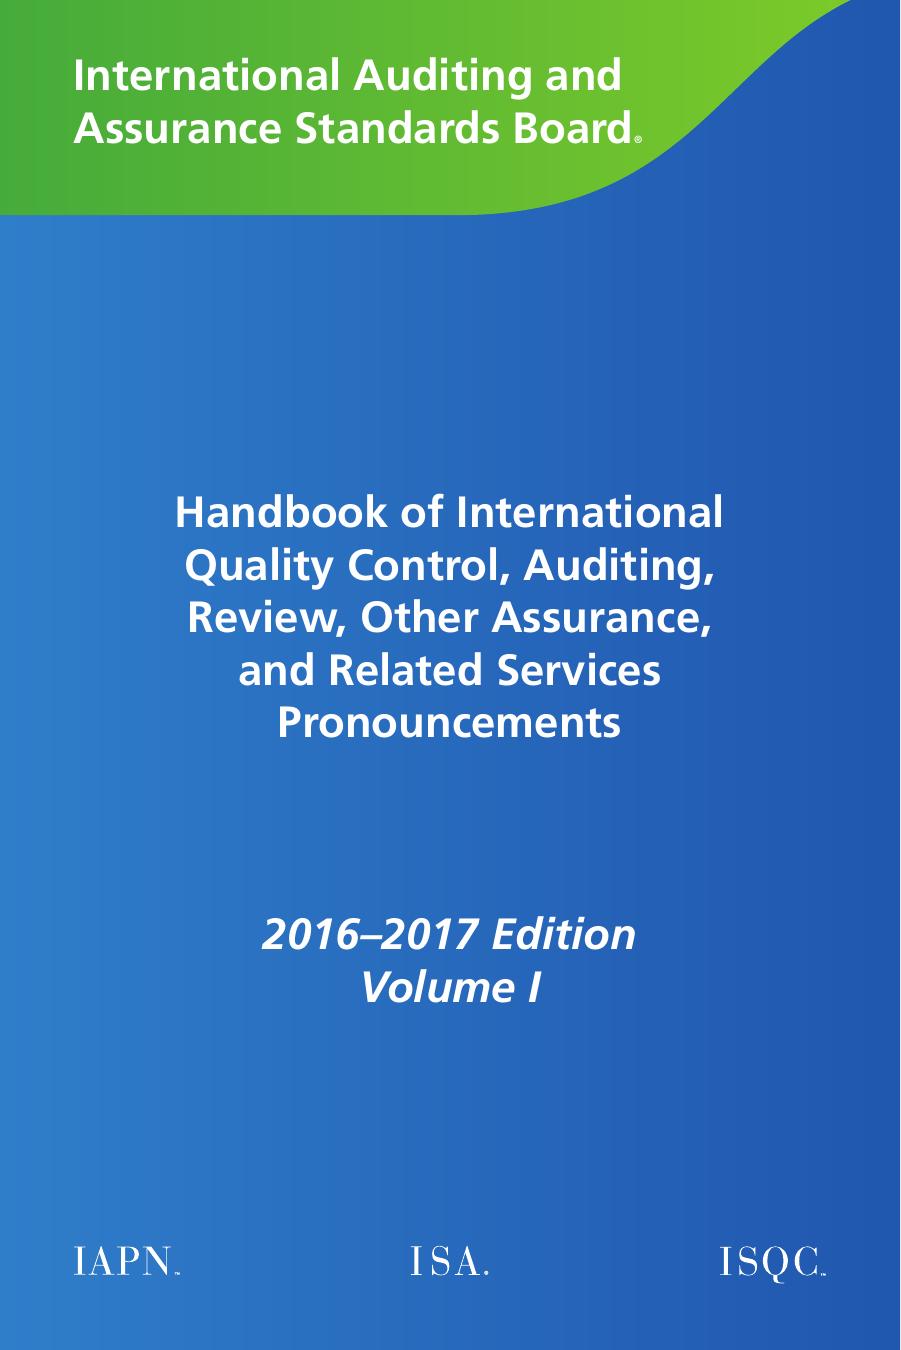 Handbook of International Quality Control, Auditing, Review etc 2017